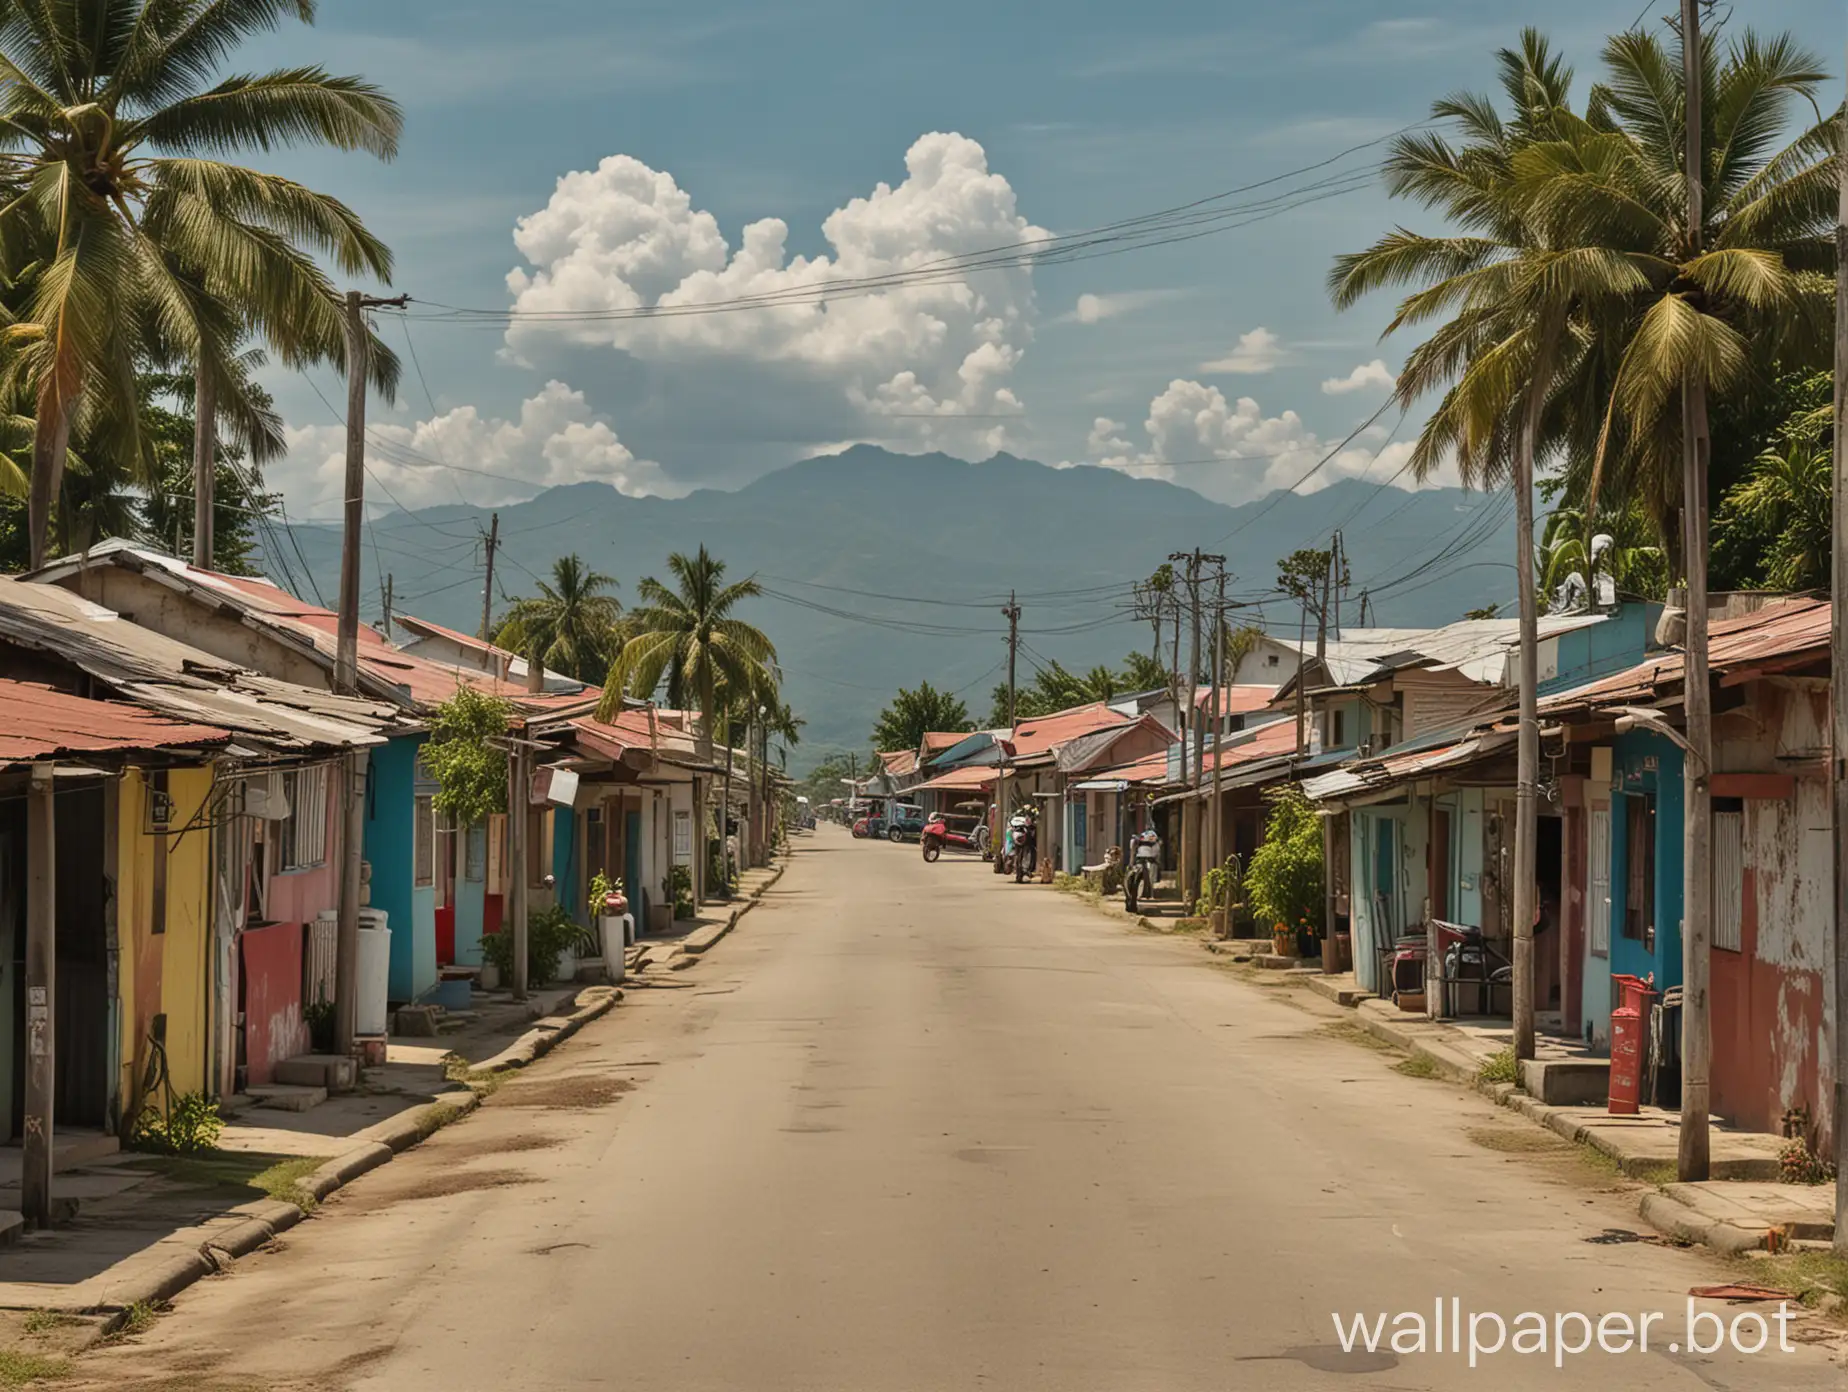 Barangay-Kalibo-Village-Life-in-the-Philippines-Wallpaper